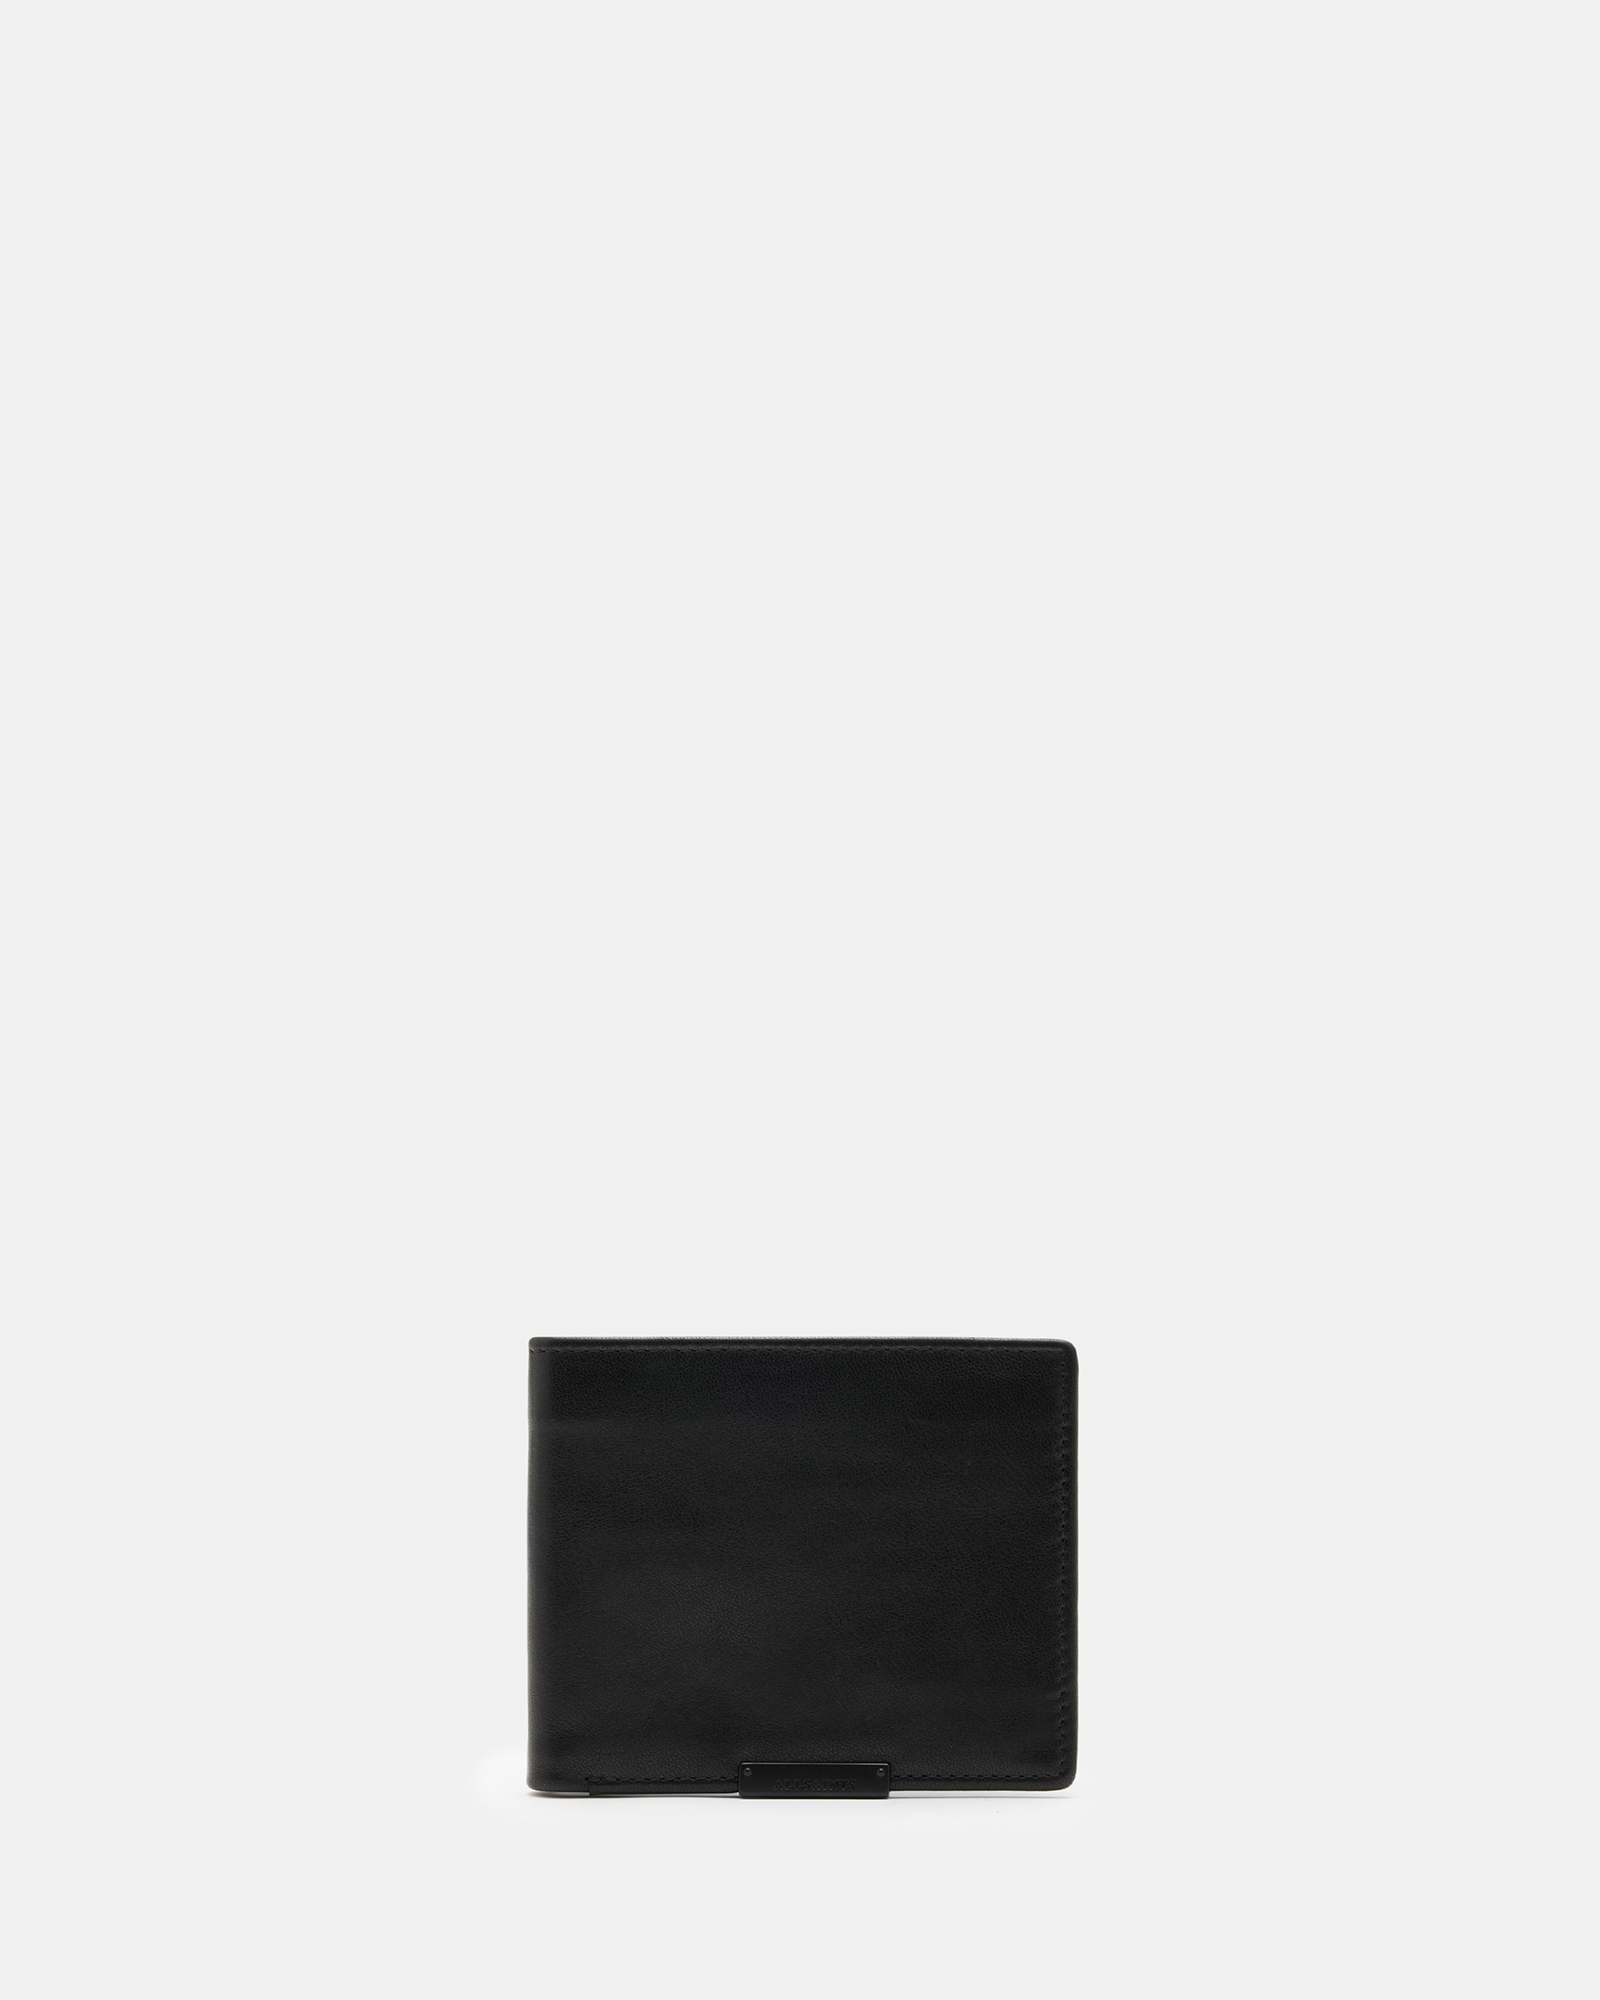 Attain Leather Cardholder Wallet Black | ALLSAINTS US